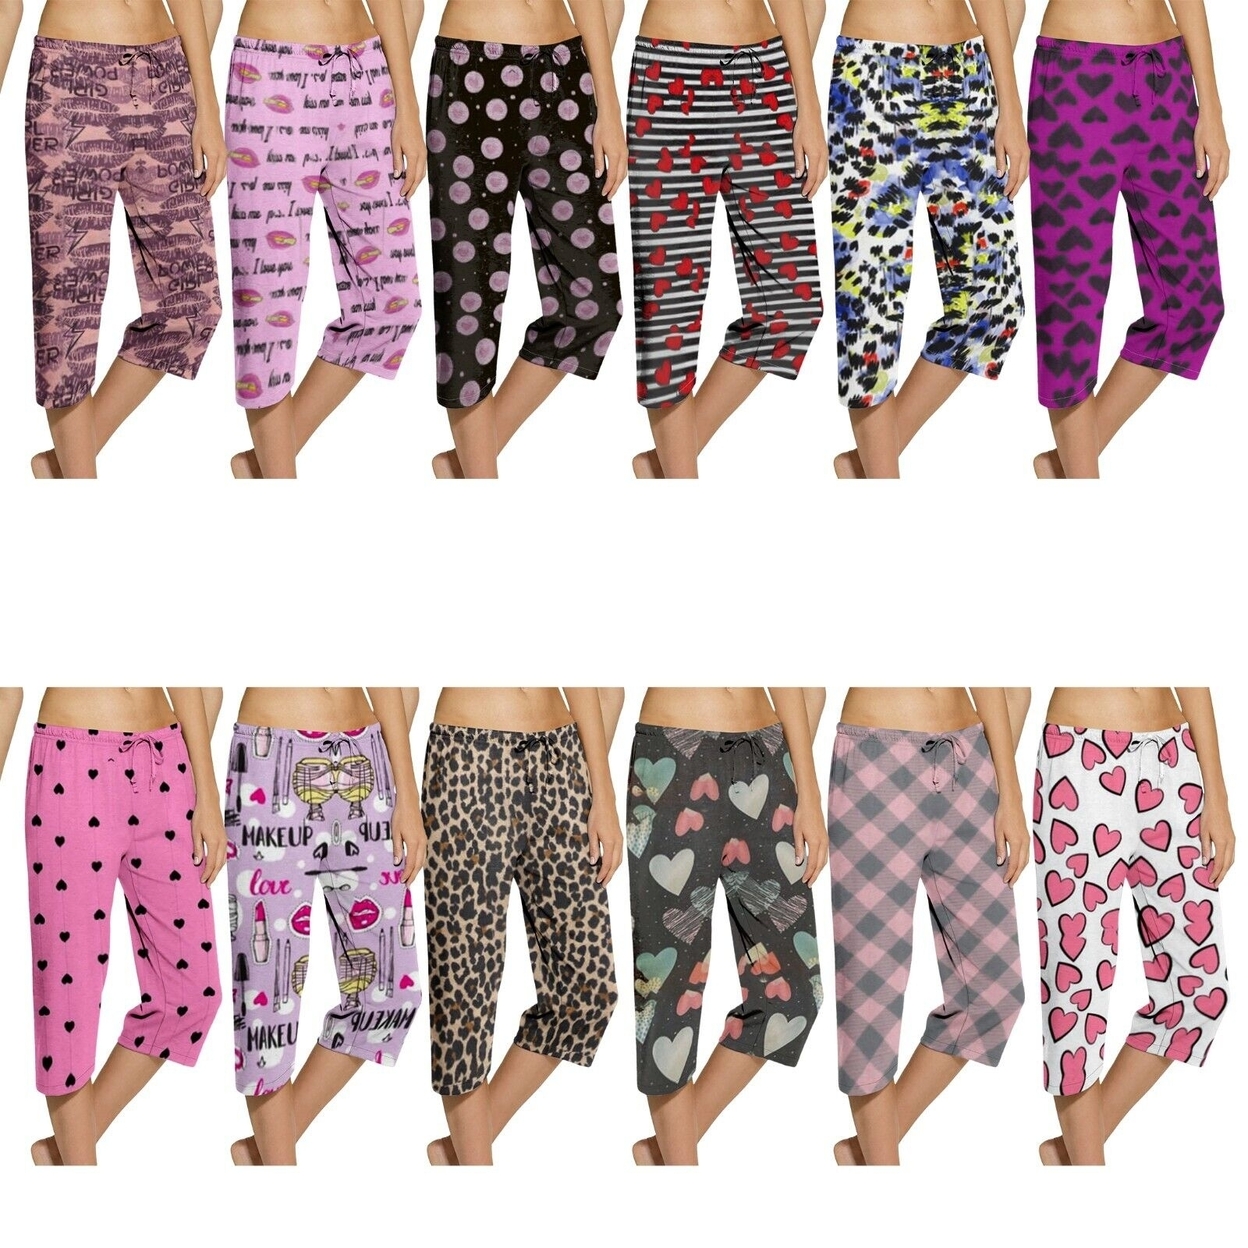 4-Pack: Women's Ultra-Soft Cozy Terry Knit Comfy Capri Sleepwear Pajama Bottoms - Large, Love